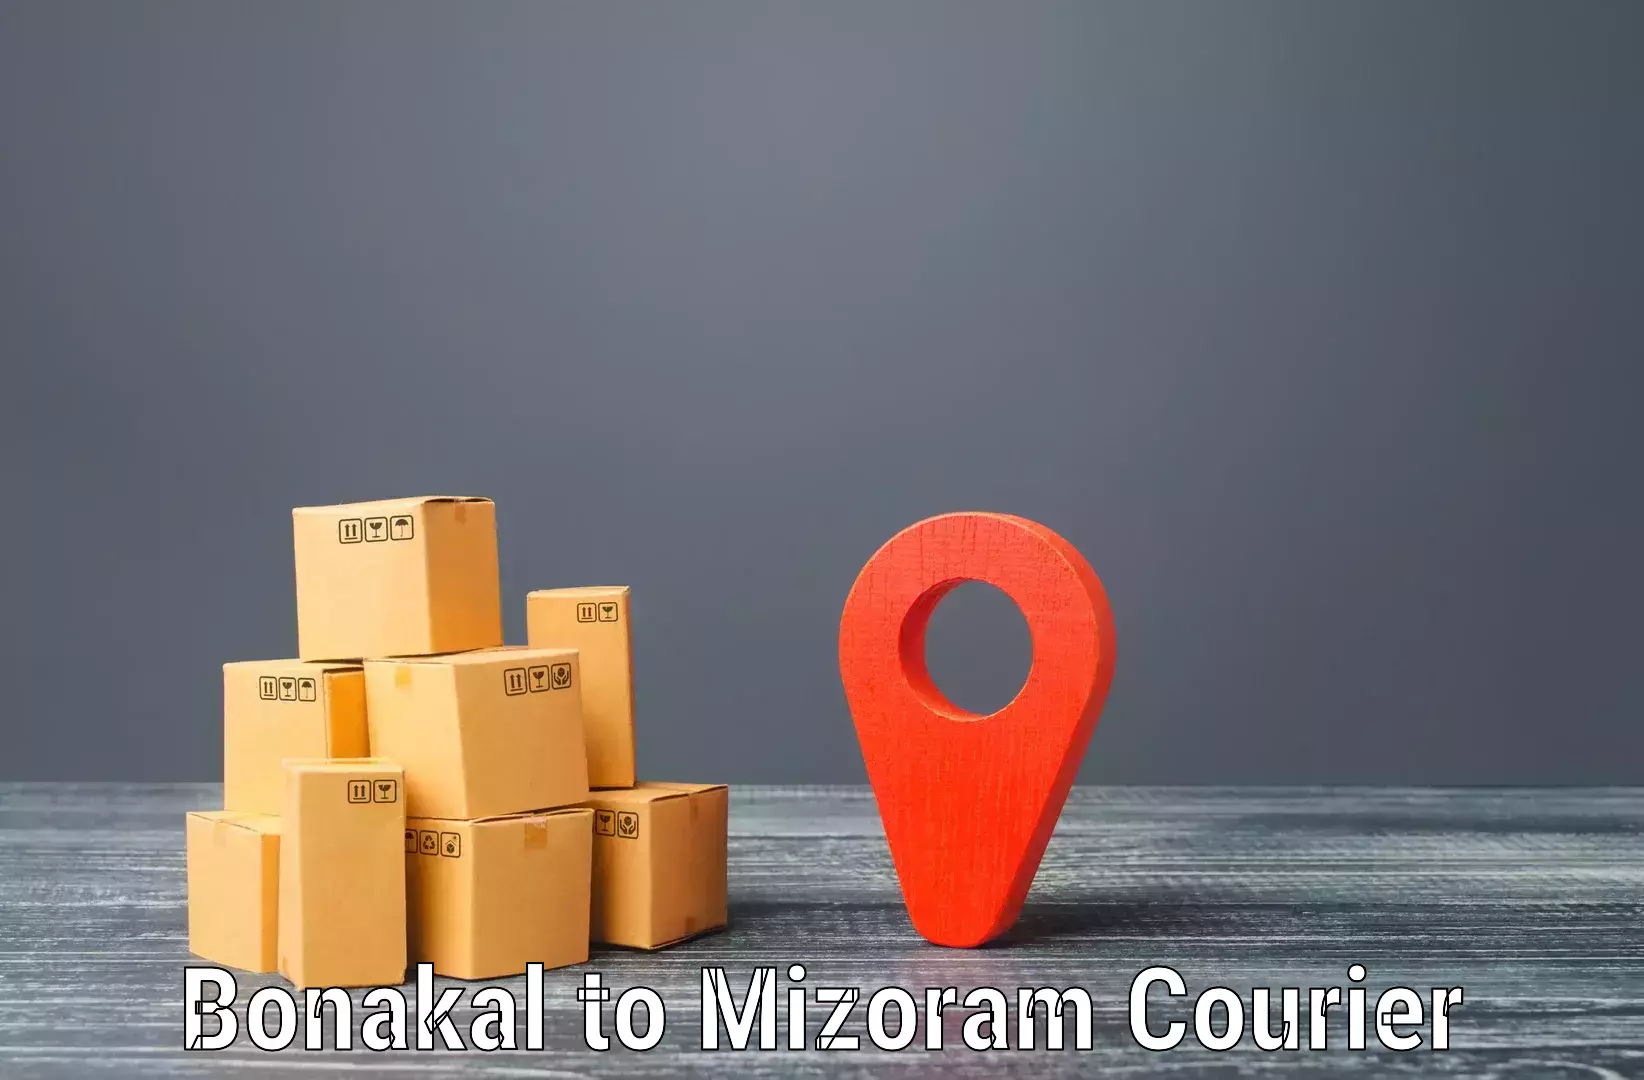 Smart shipping technology Bonakal to Mizoram